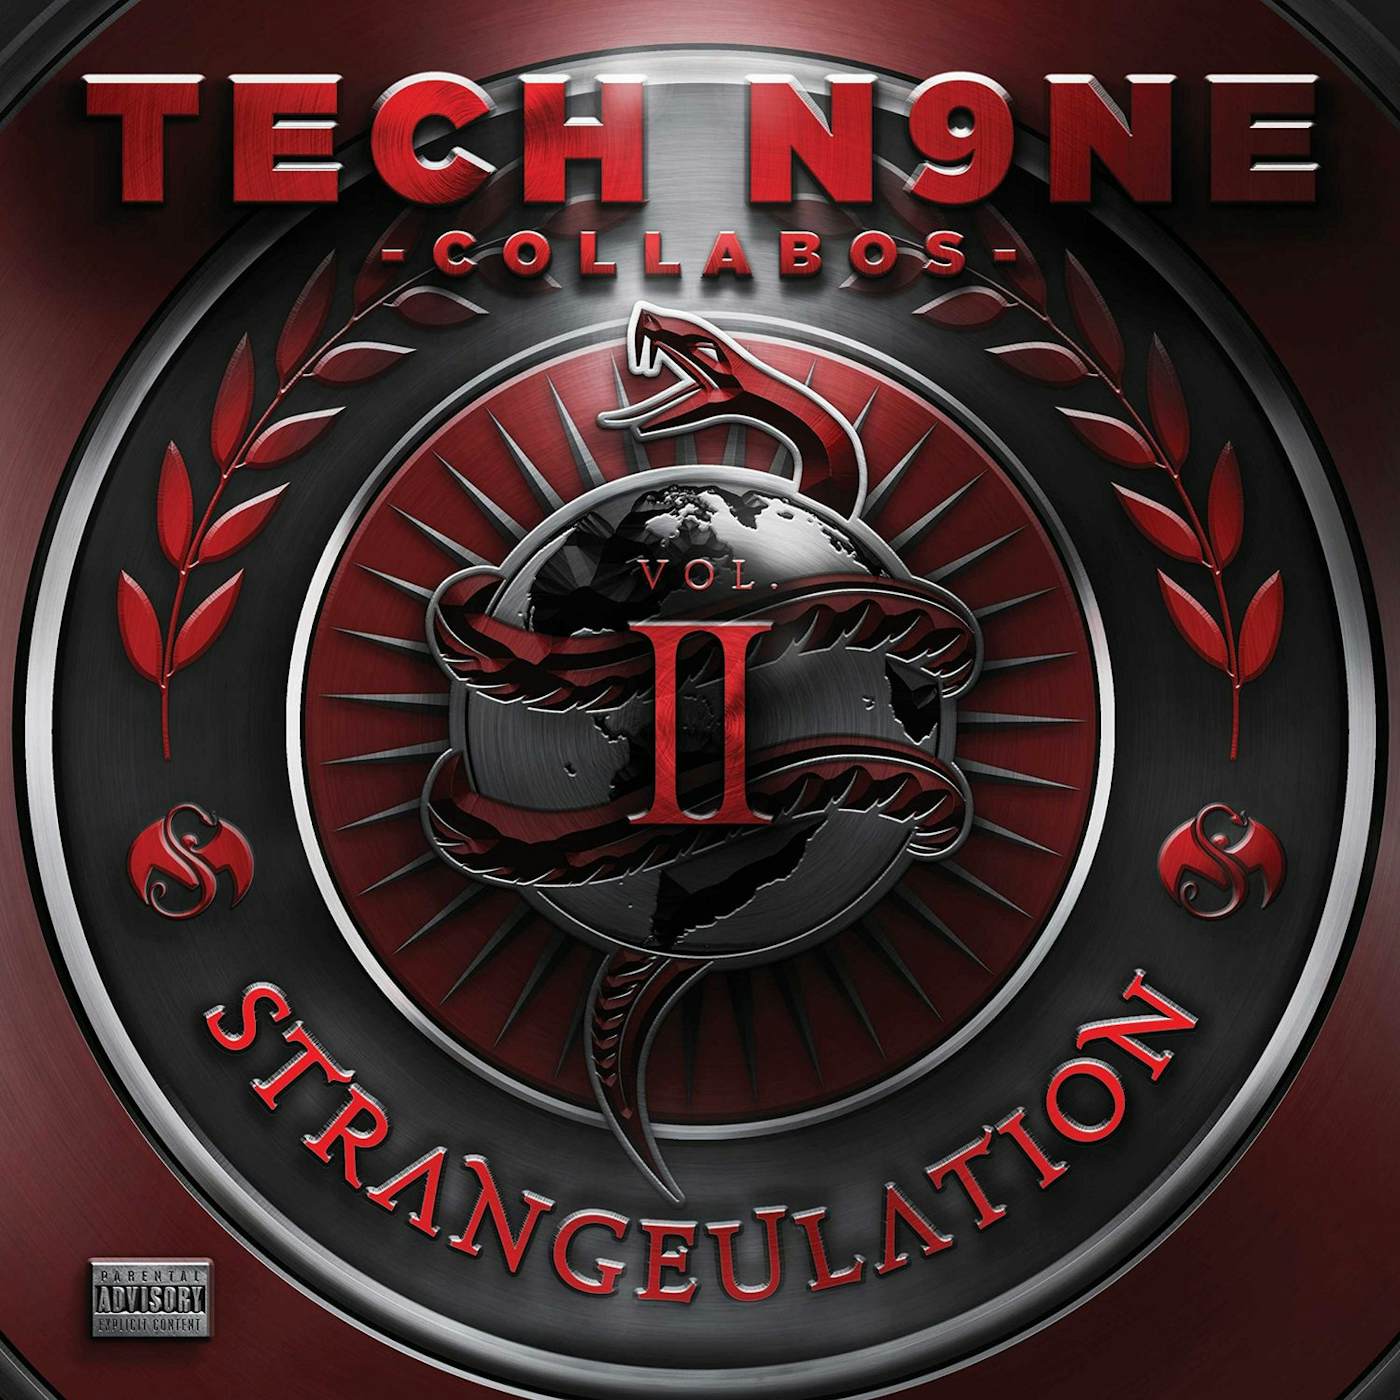 Tech N9ne Collabos STRANGEULATION VOL II CD